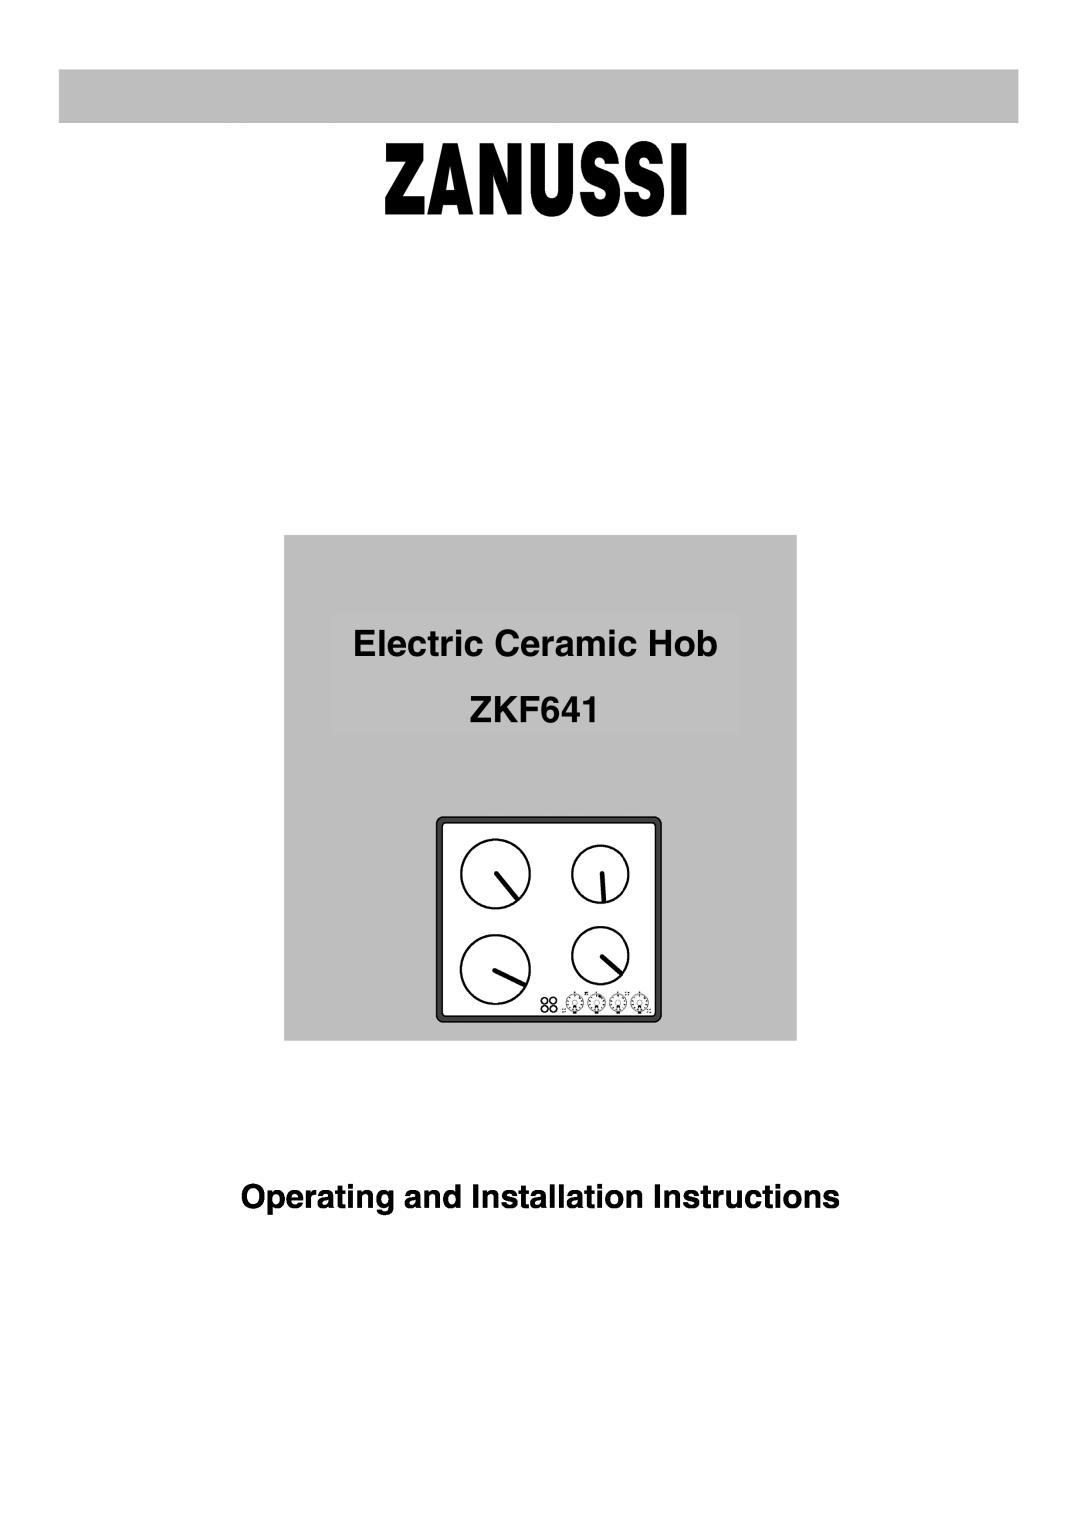 Zanussi installation instructions Electric Ceramic Hob ZKF641, Operating and Installation Instructions 